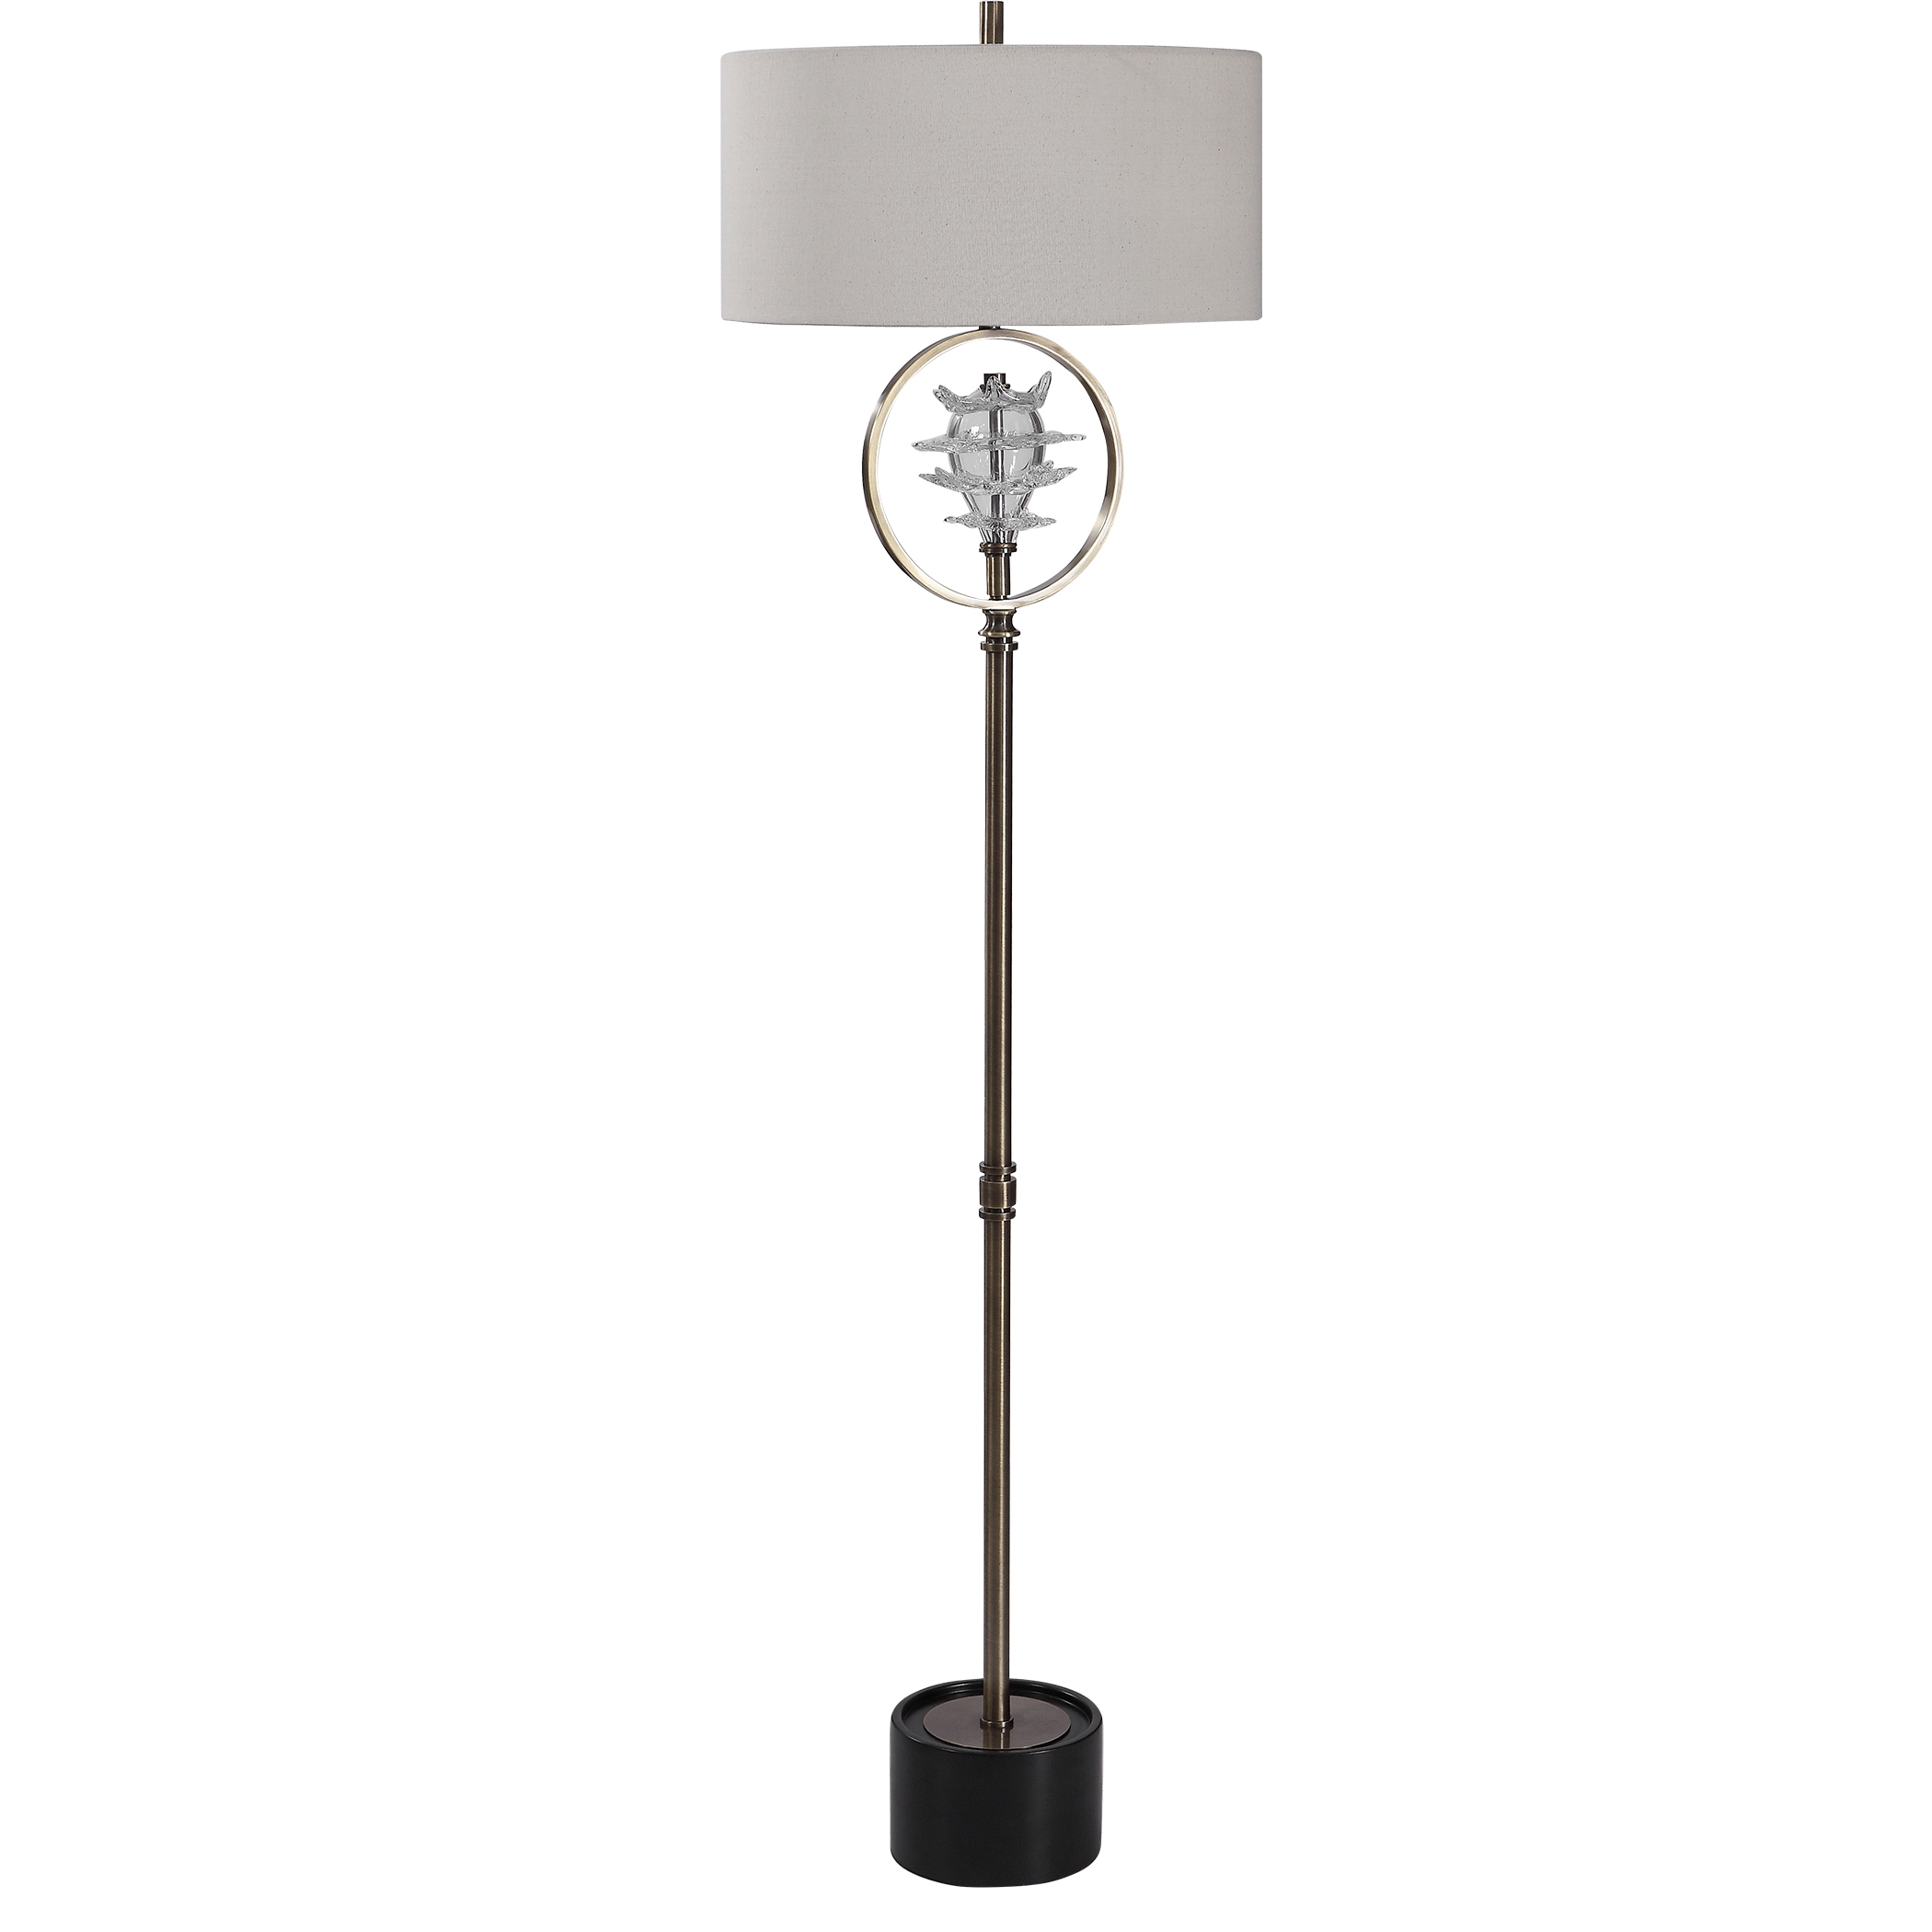 Pitaya Antique Brass Floor Lamp - Image 6